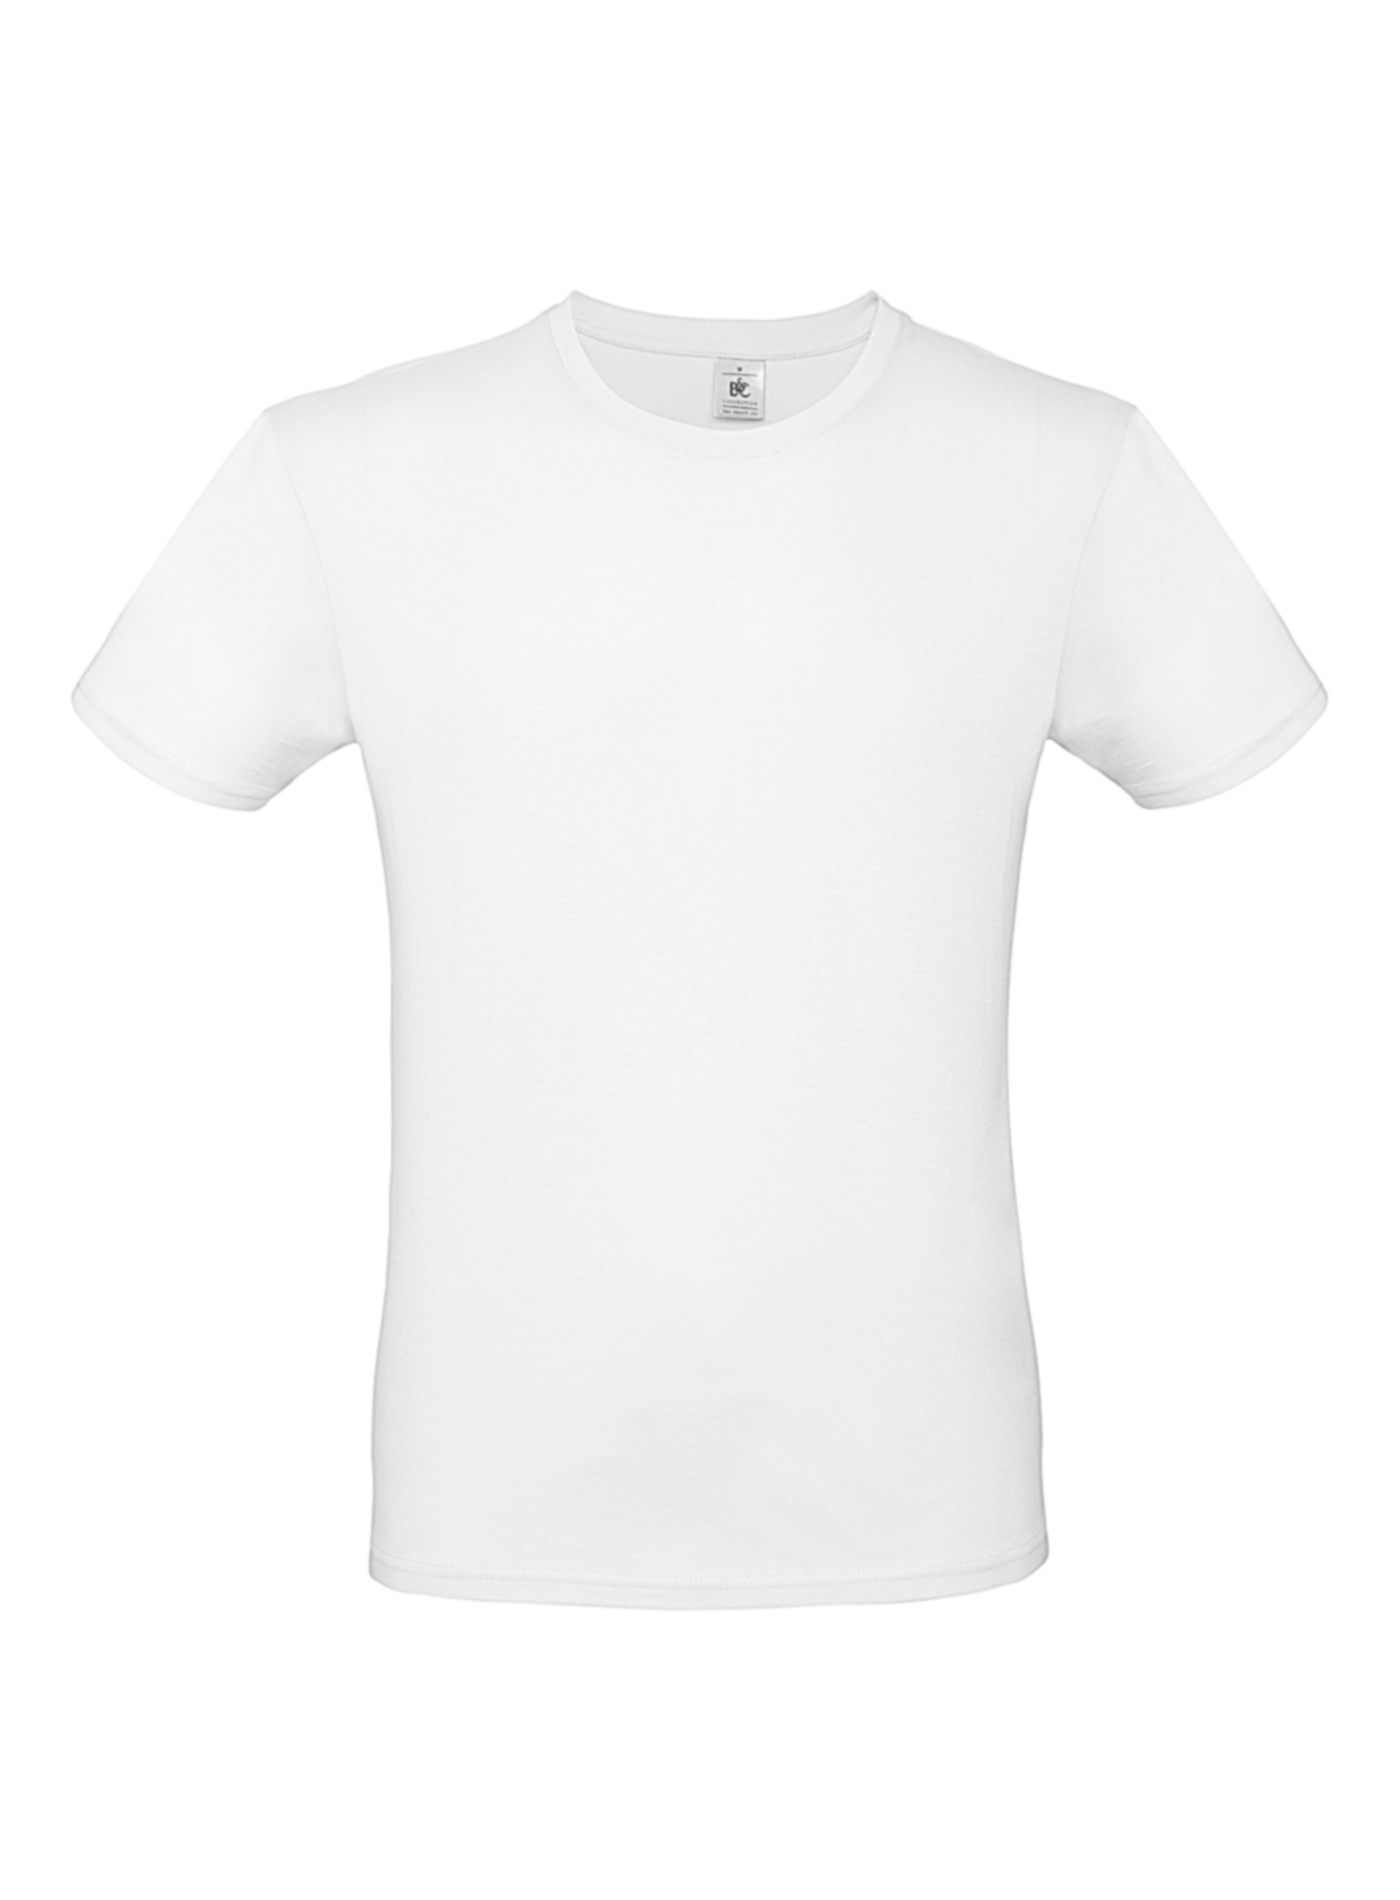 Pánské tričko B&C - Bílá XS